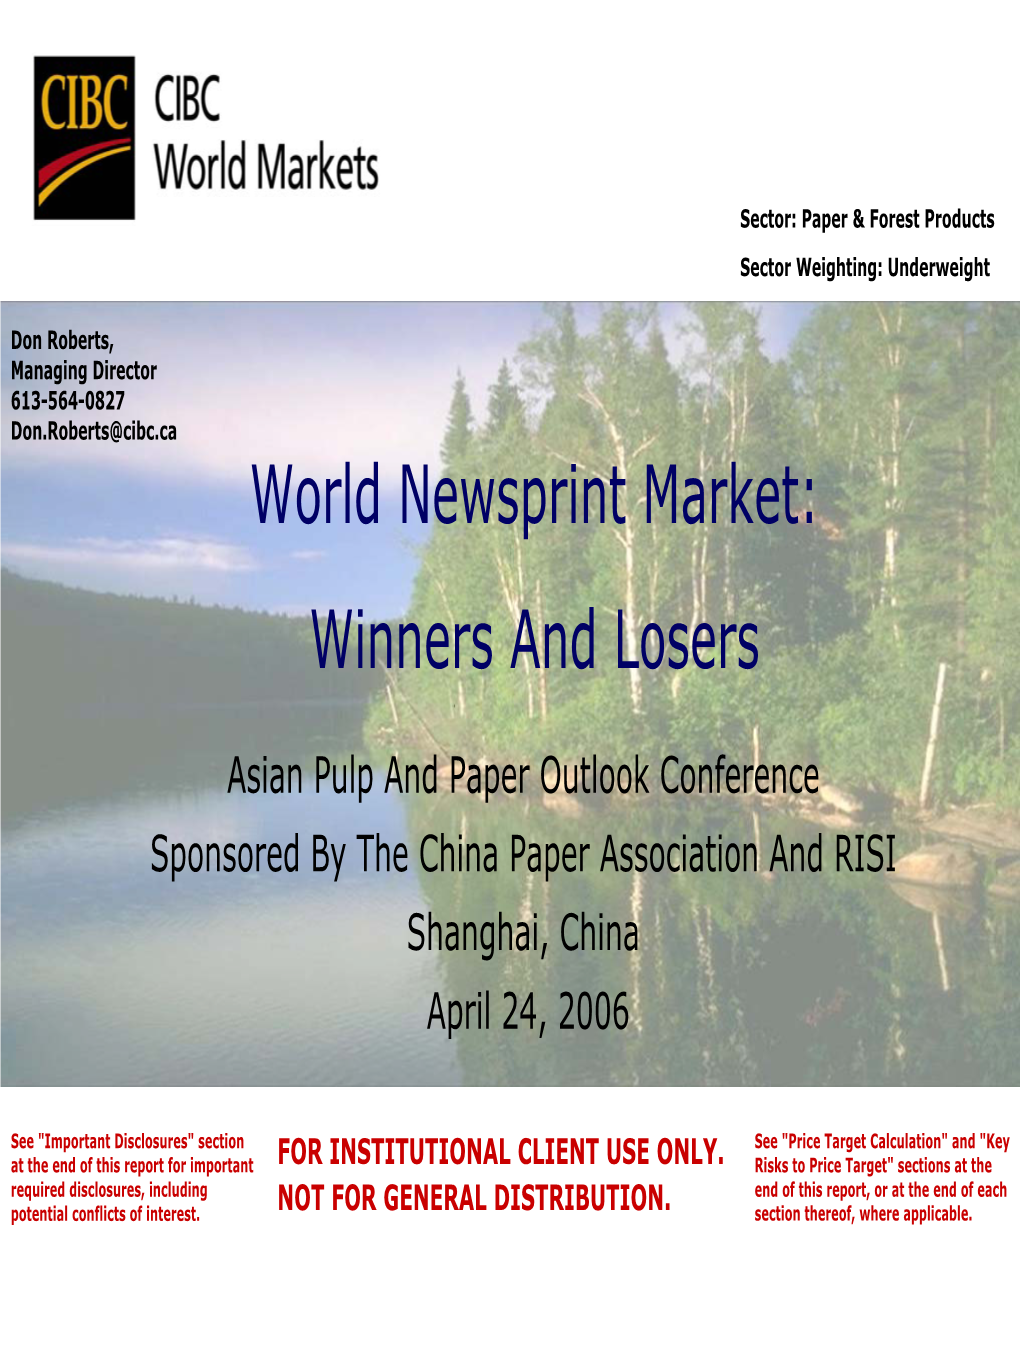 World Newsprint Market: Winners and Losers